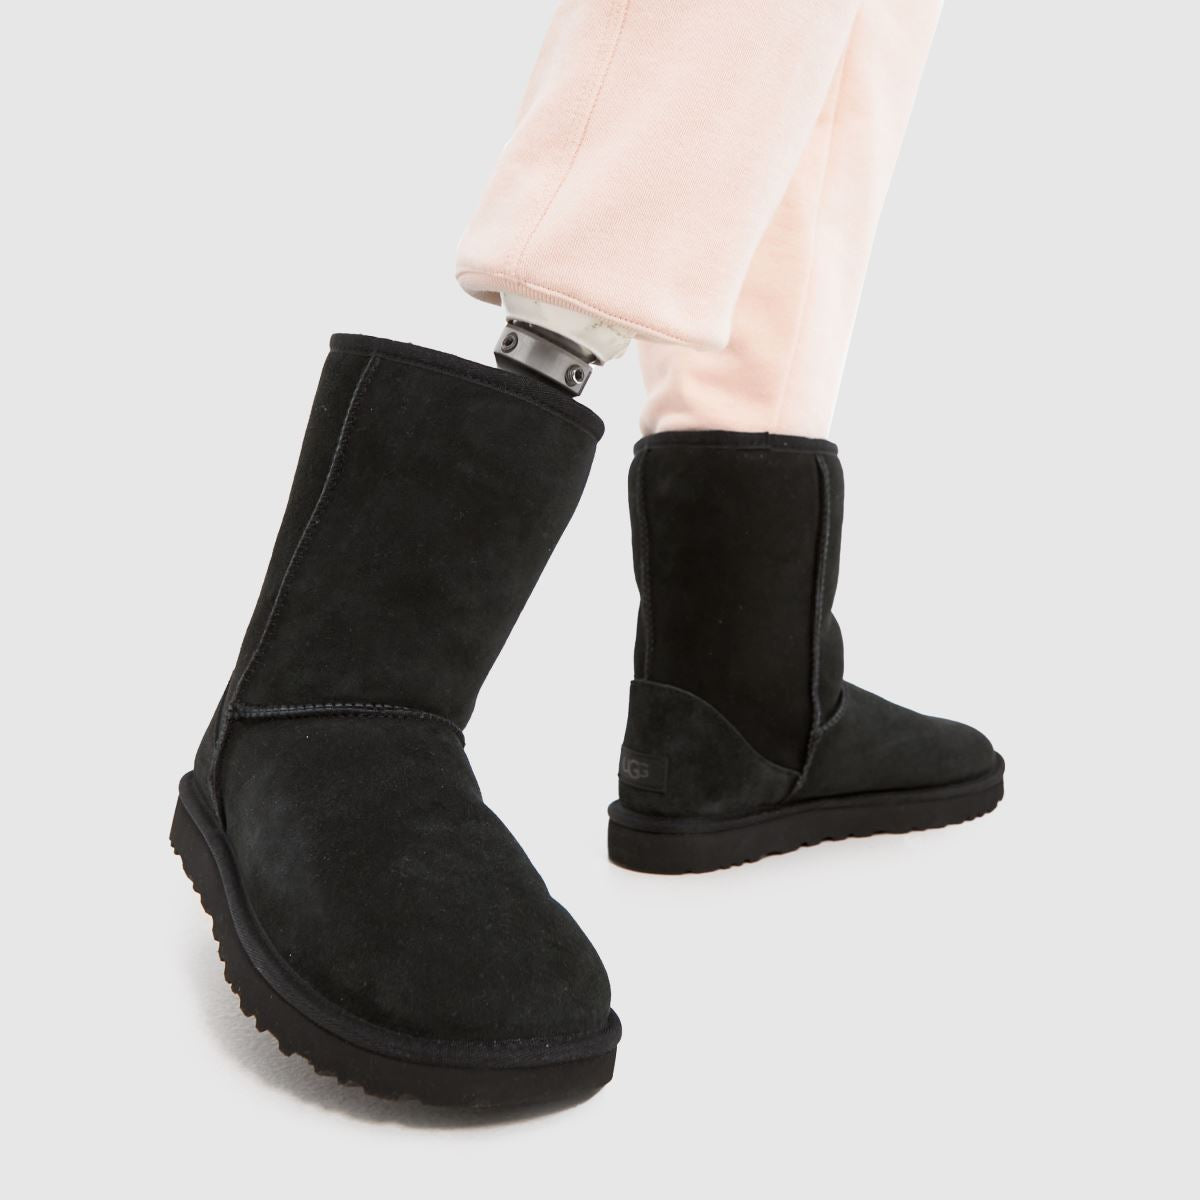 ugg classic short black sheepskin boots - size 8